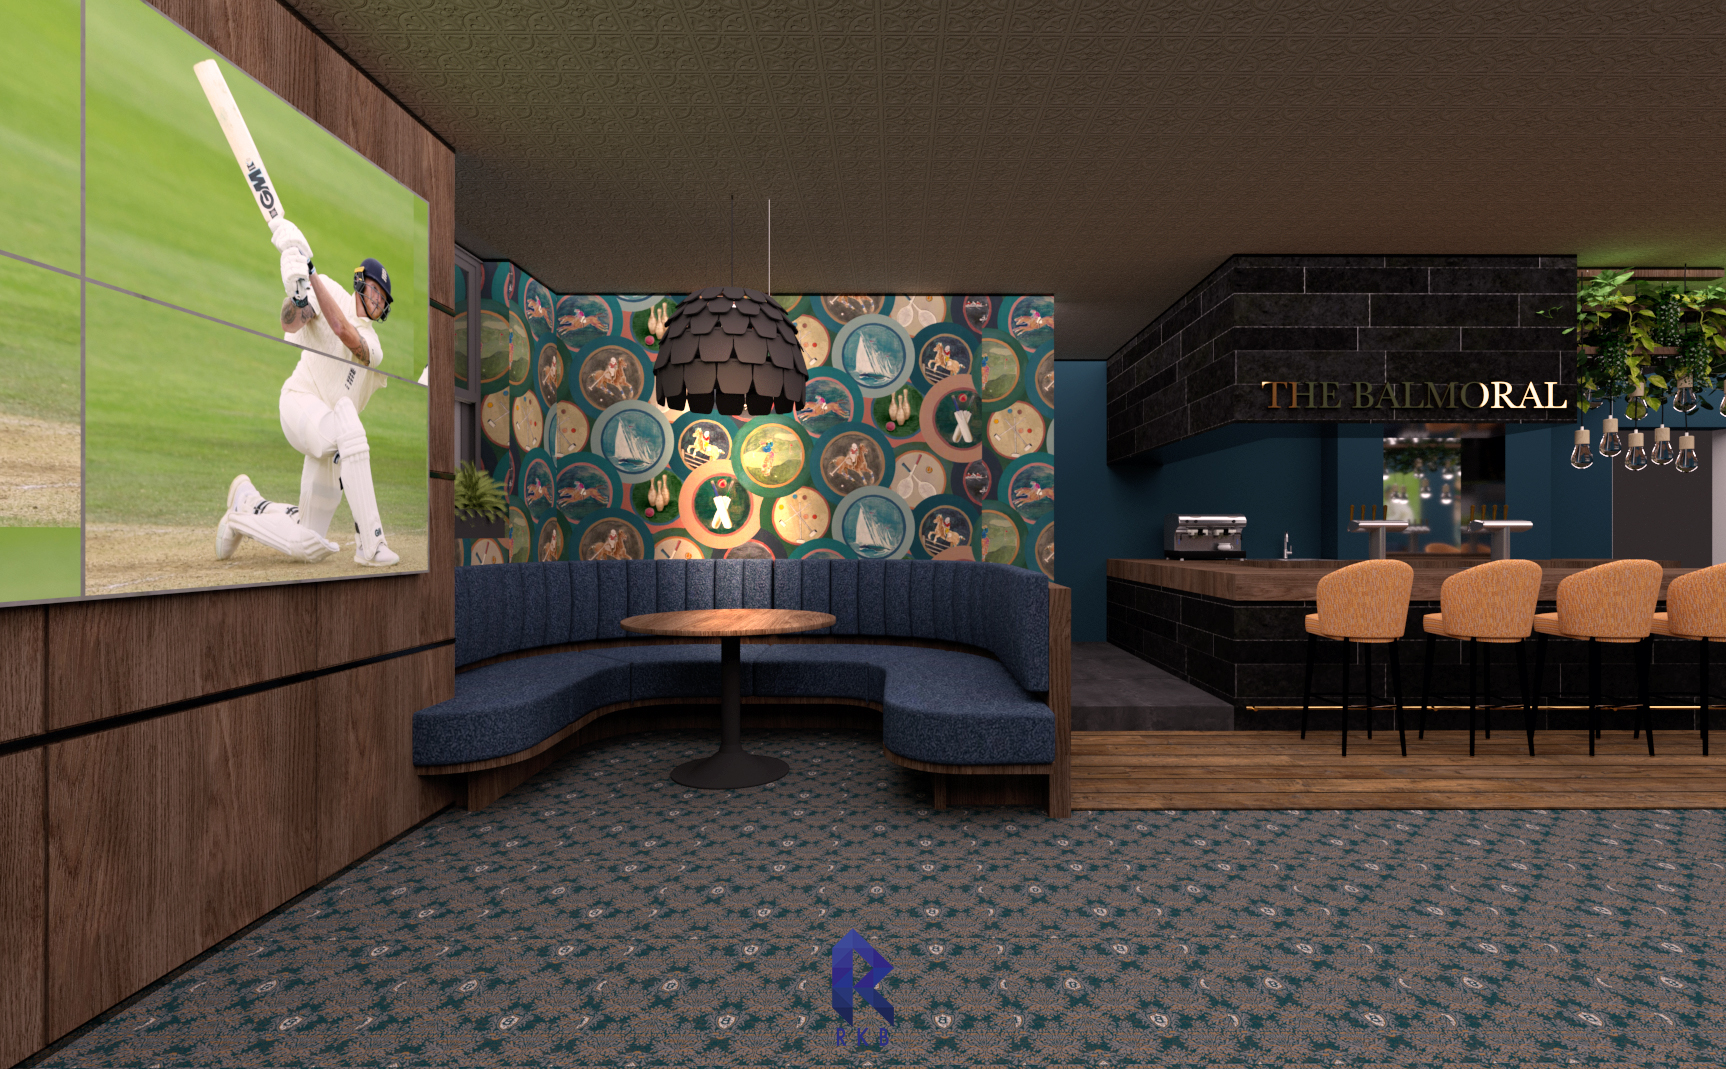 cricket theme pub interiors